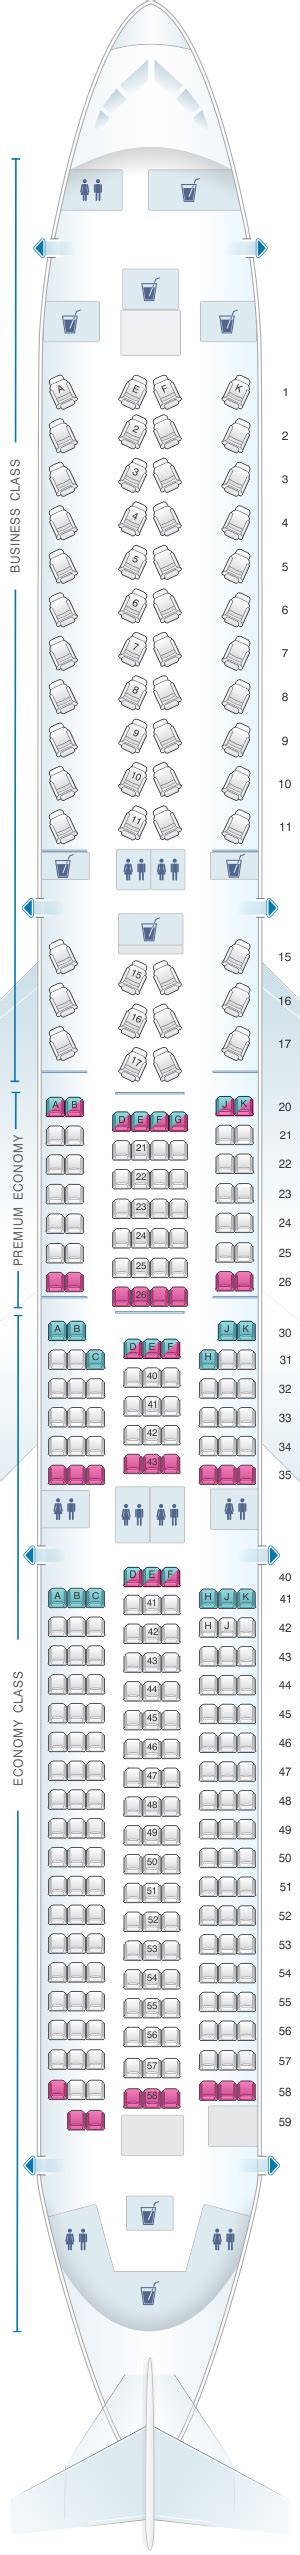 Airbus A Seat Map Image To U